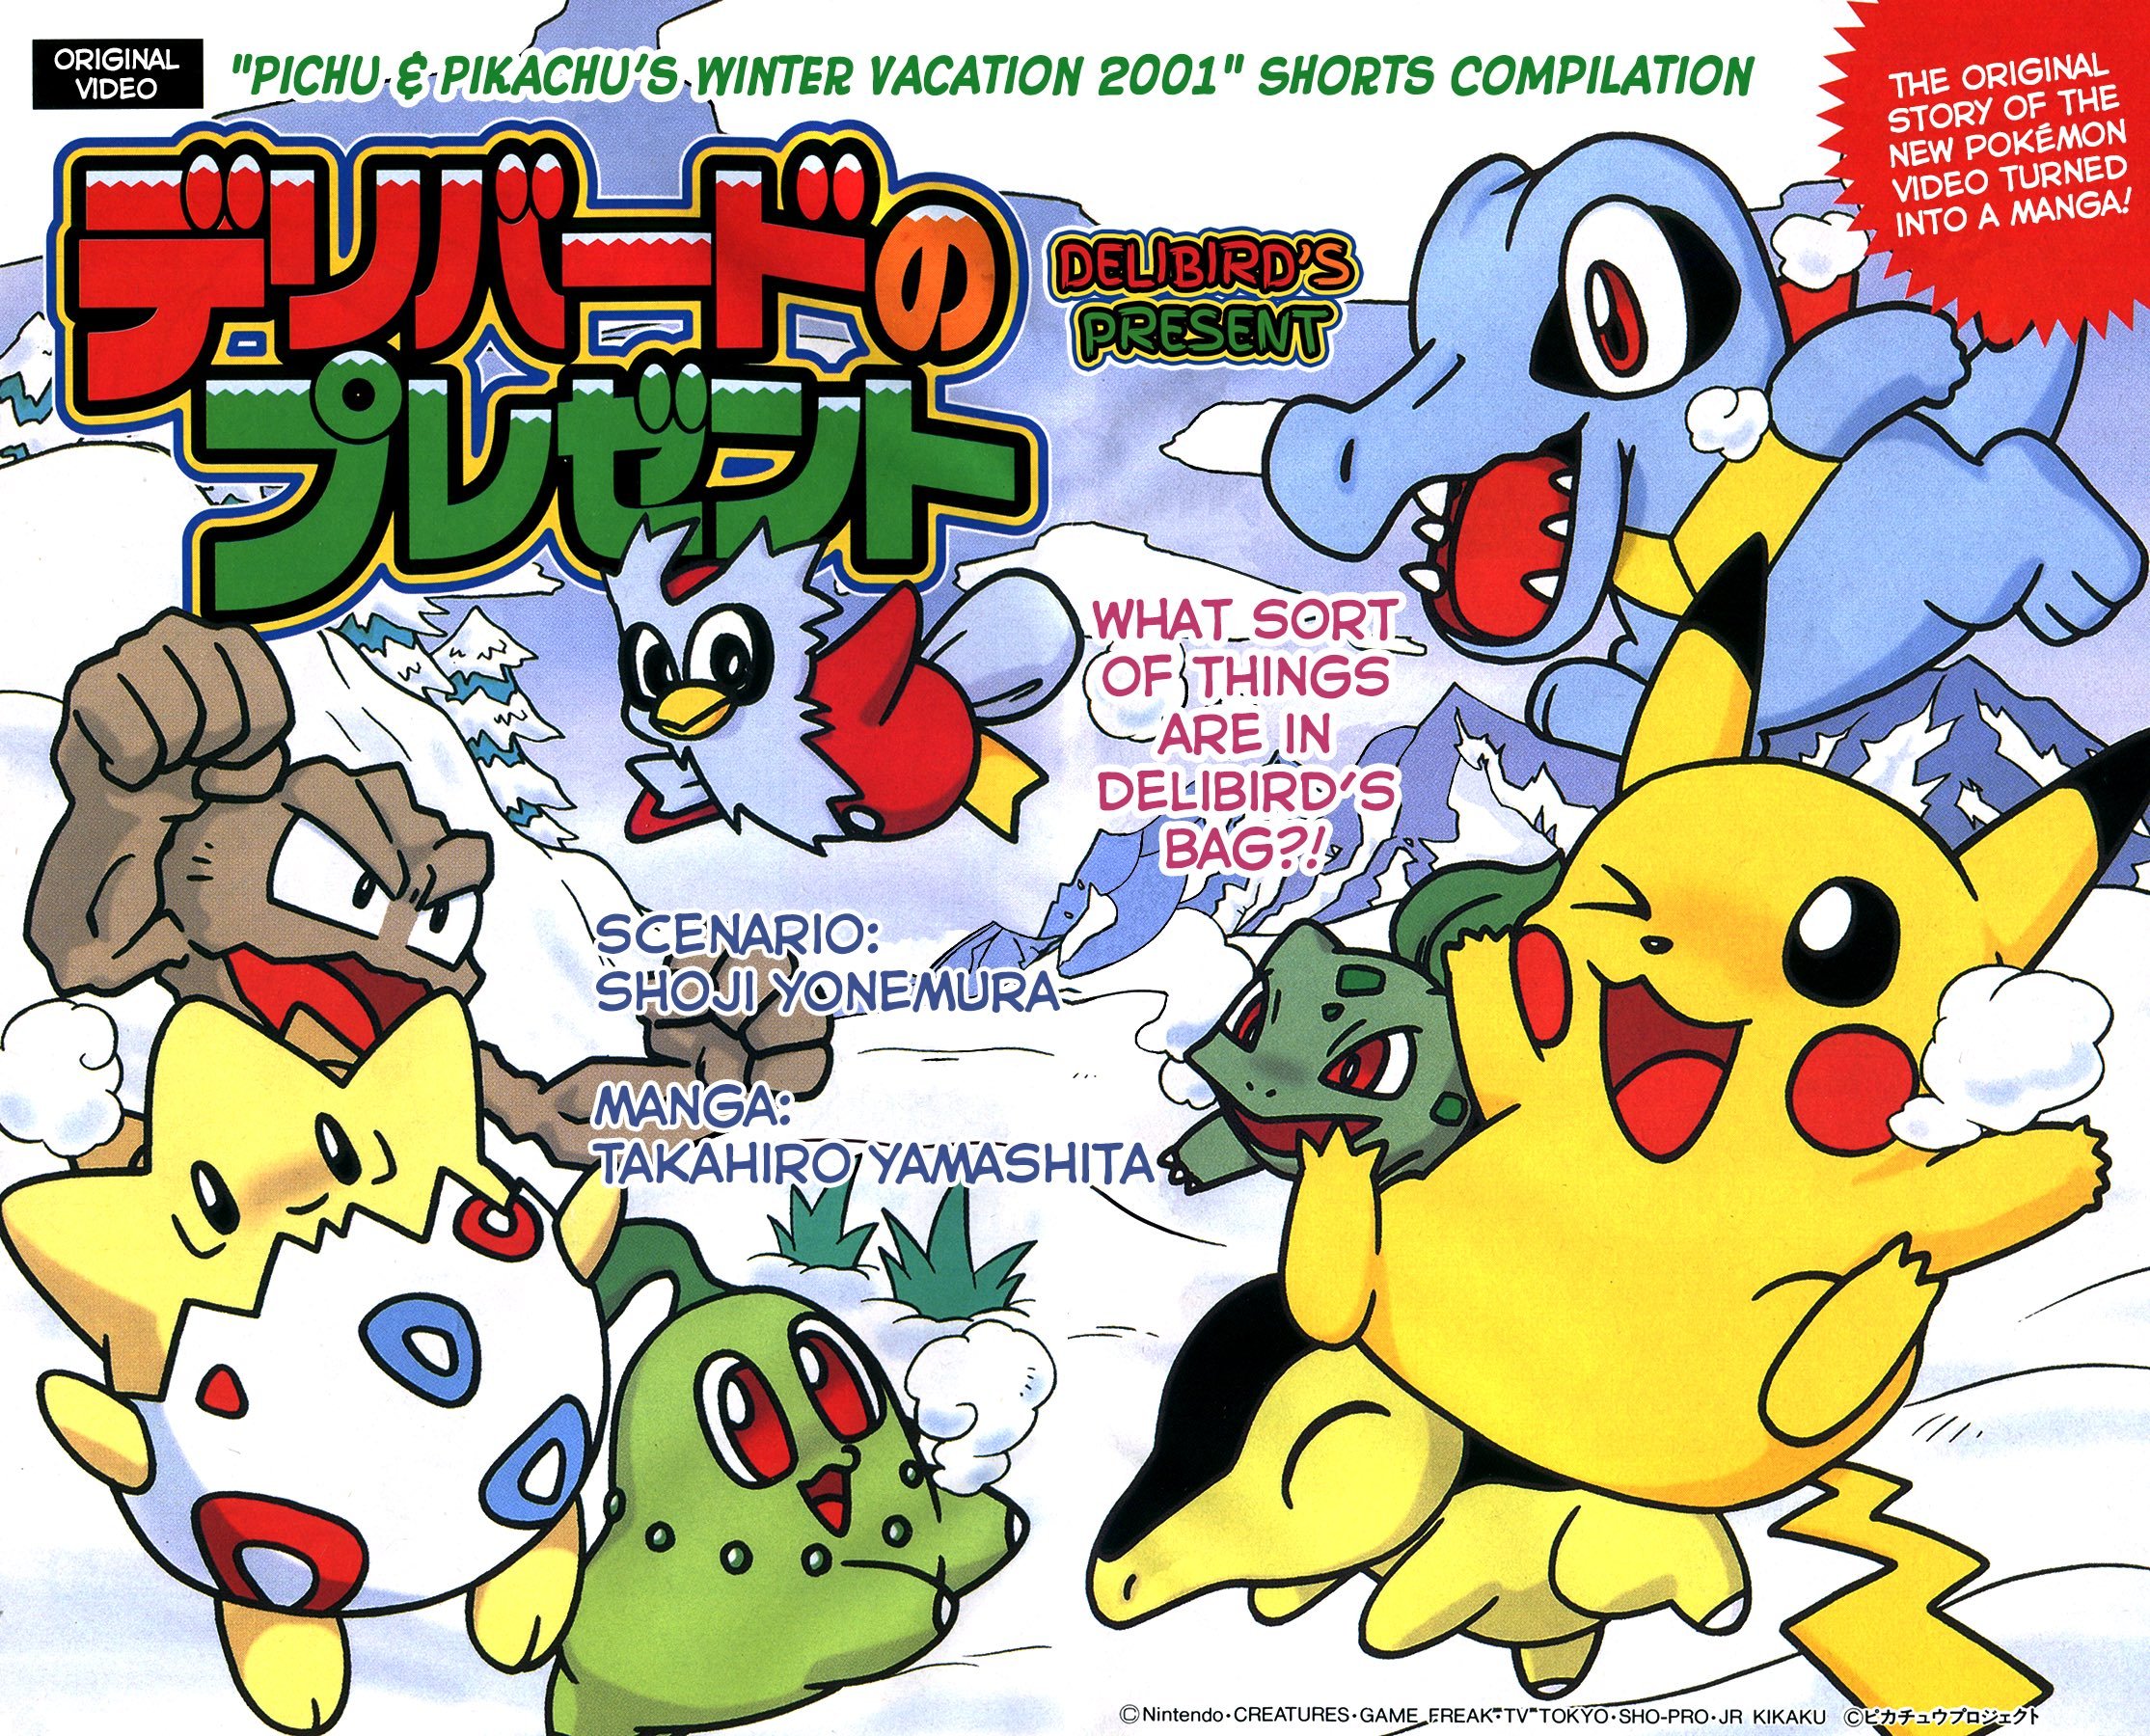 Pokémon - Delibird's Present cover 0